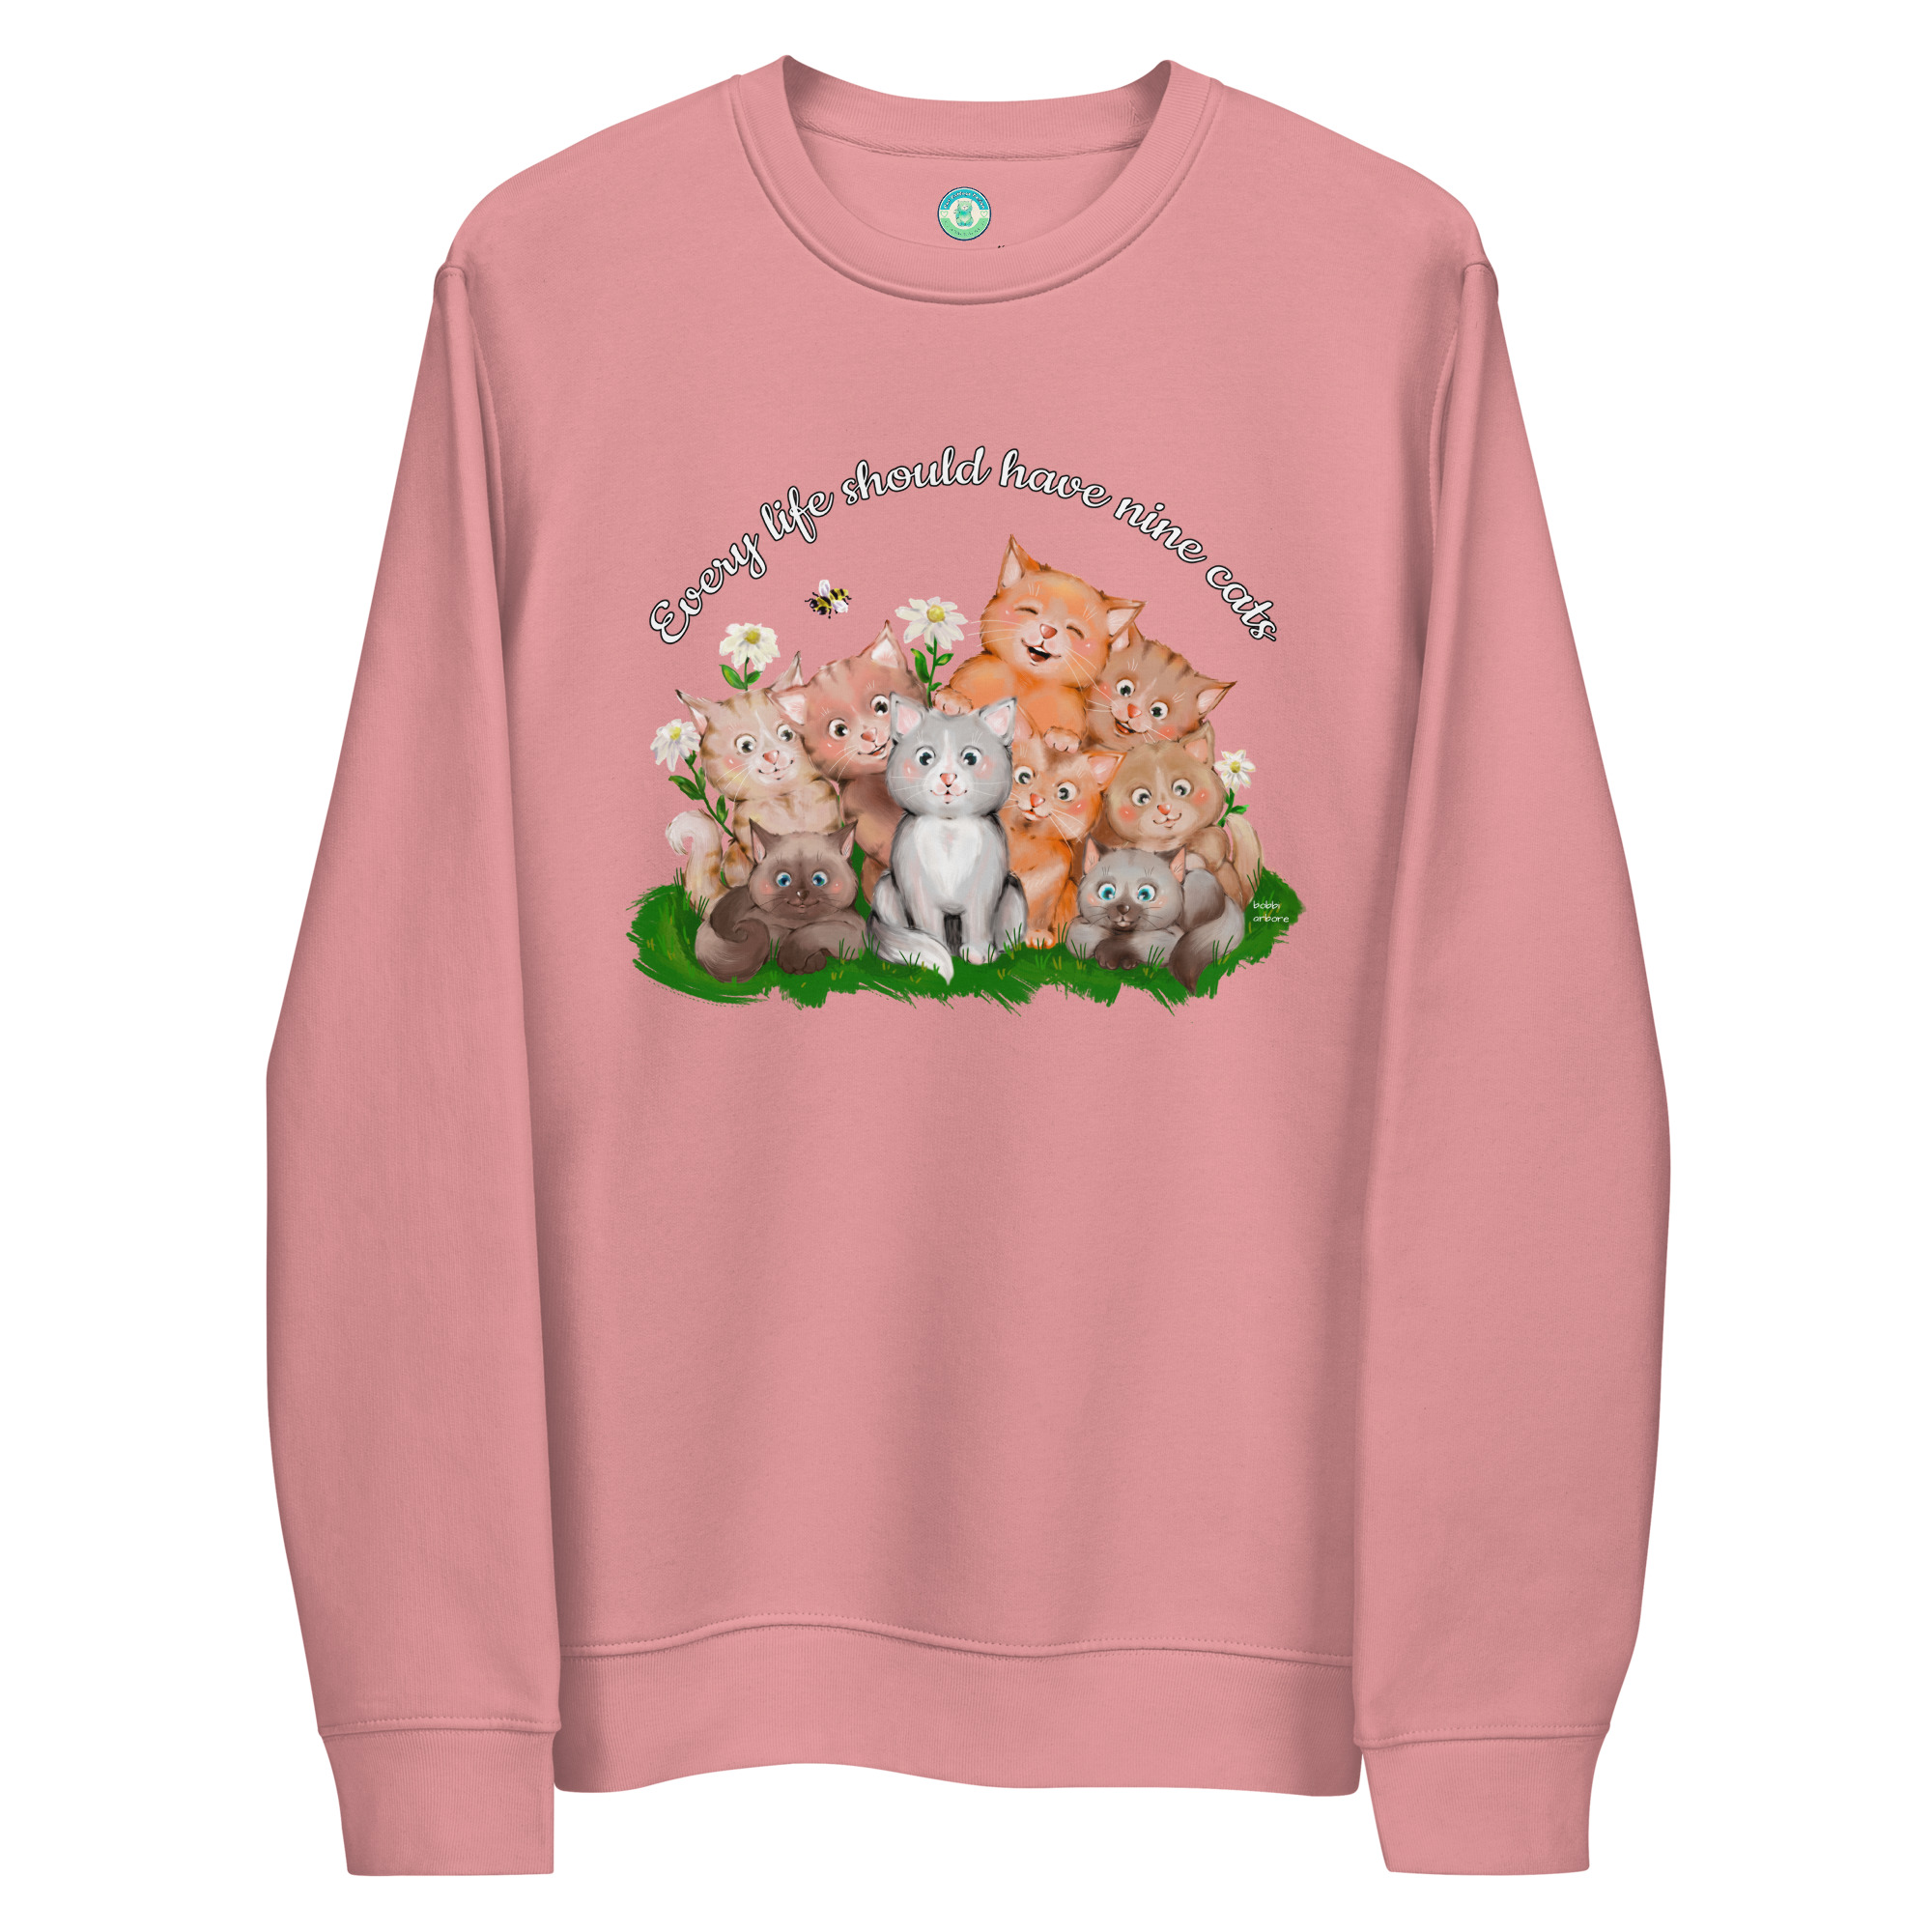 Every life should have nine cats eco sweatshirt